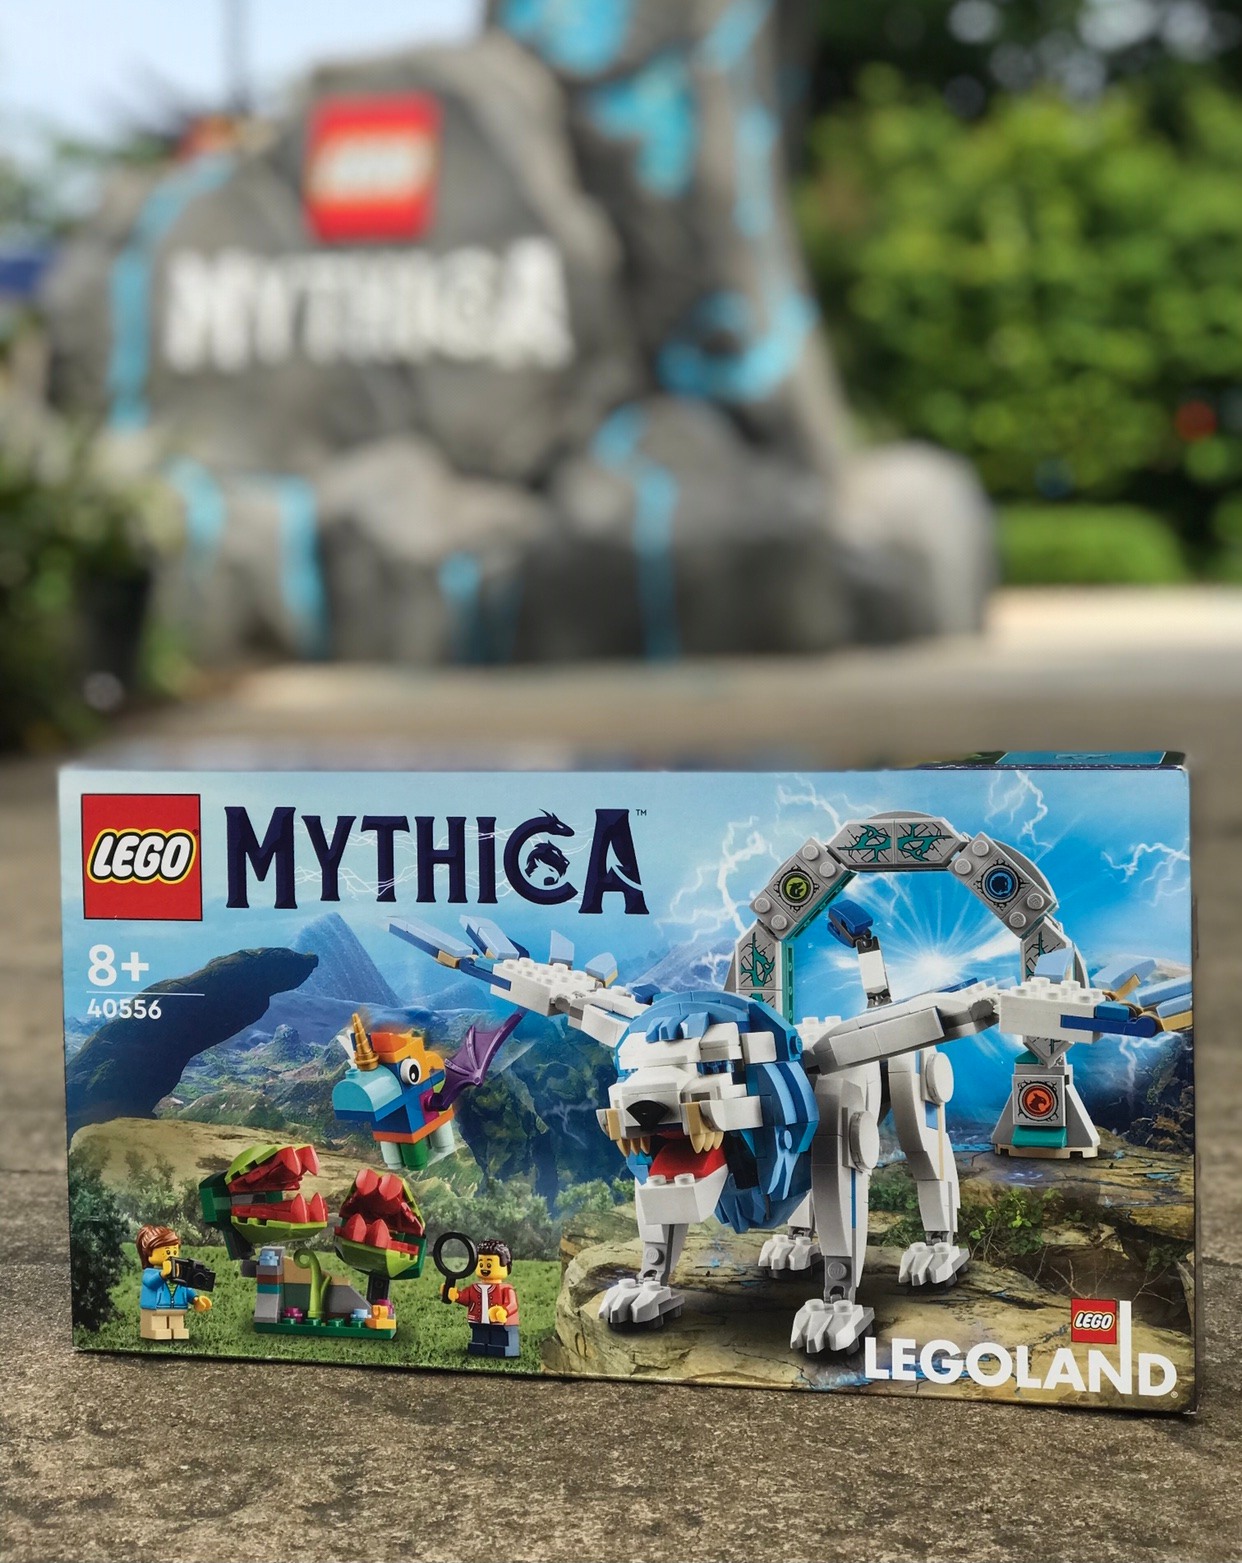 LEGO MYTHICA Set In MYTHICA